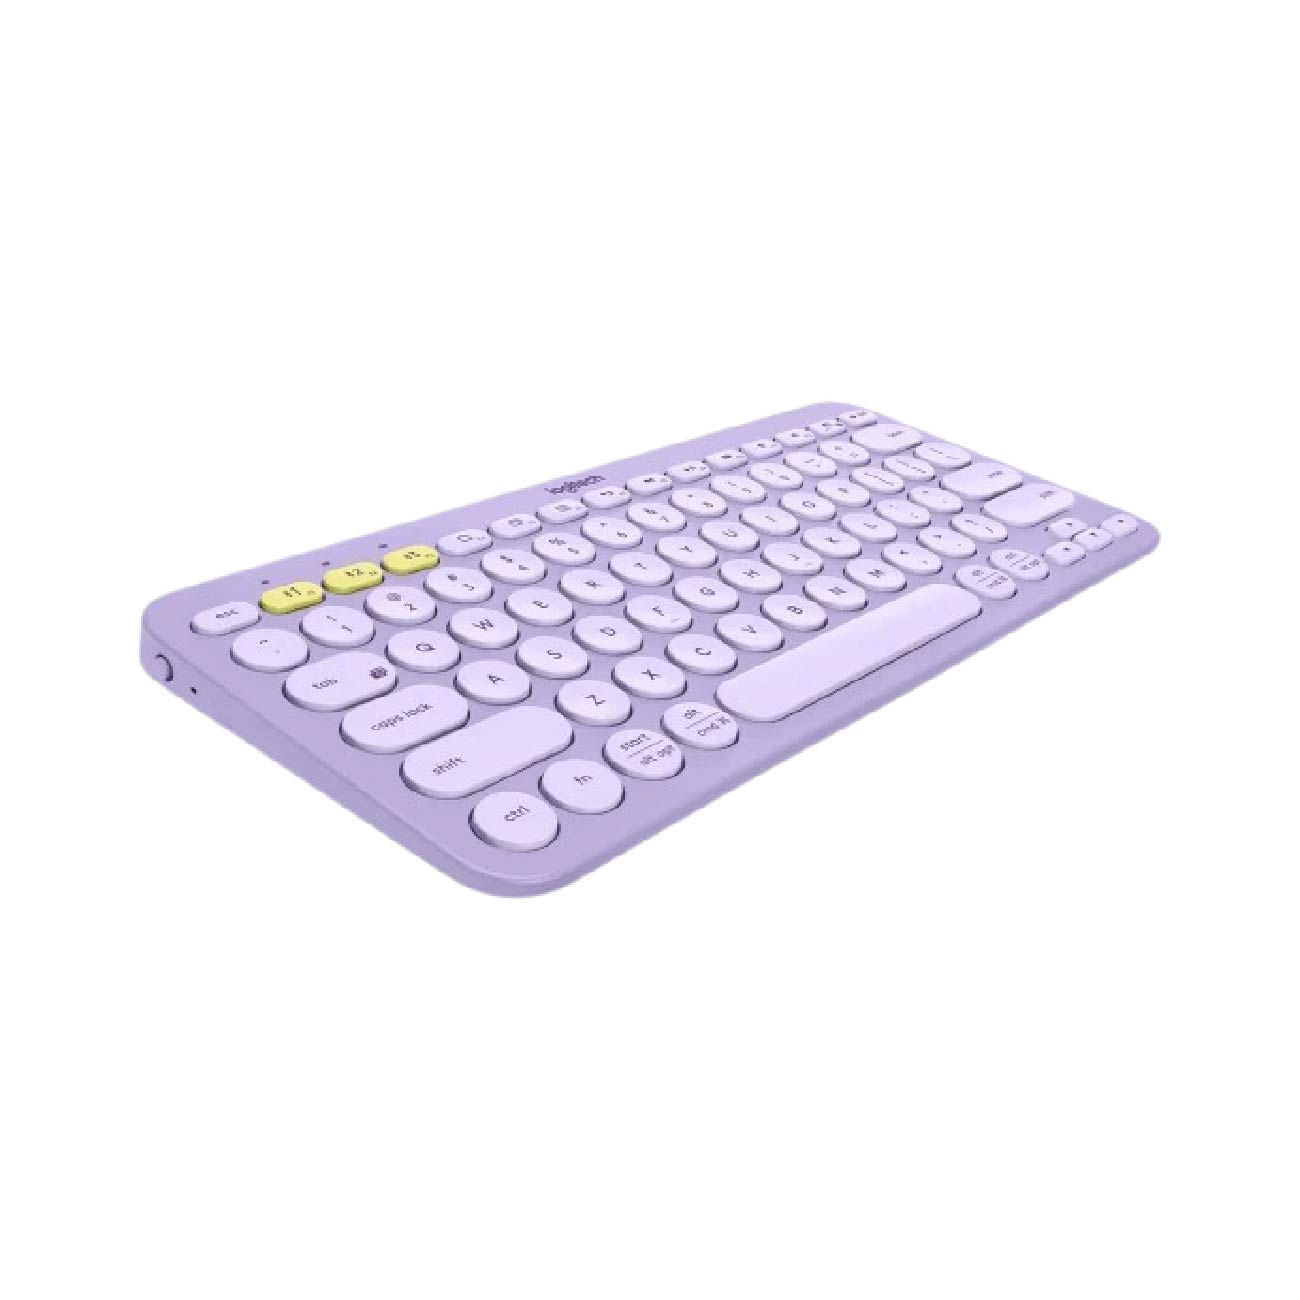 Teclado Logitech K380 Multi-Device Bluetooth Lavender